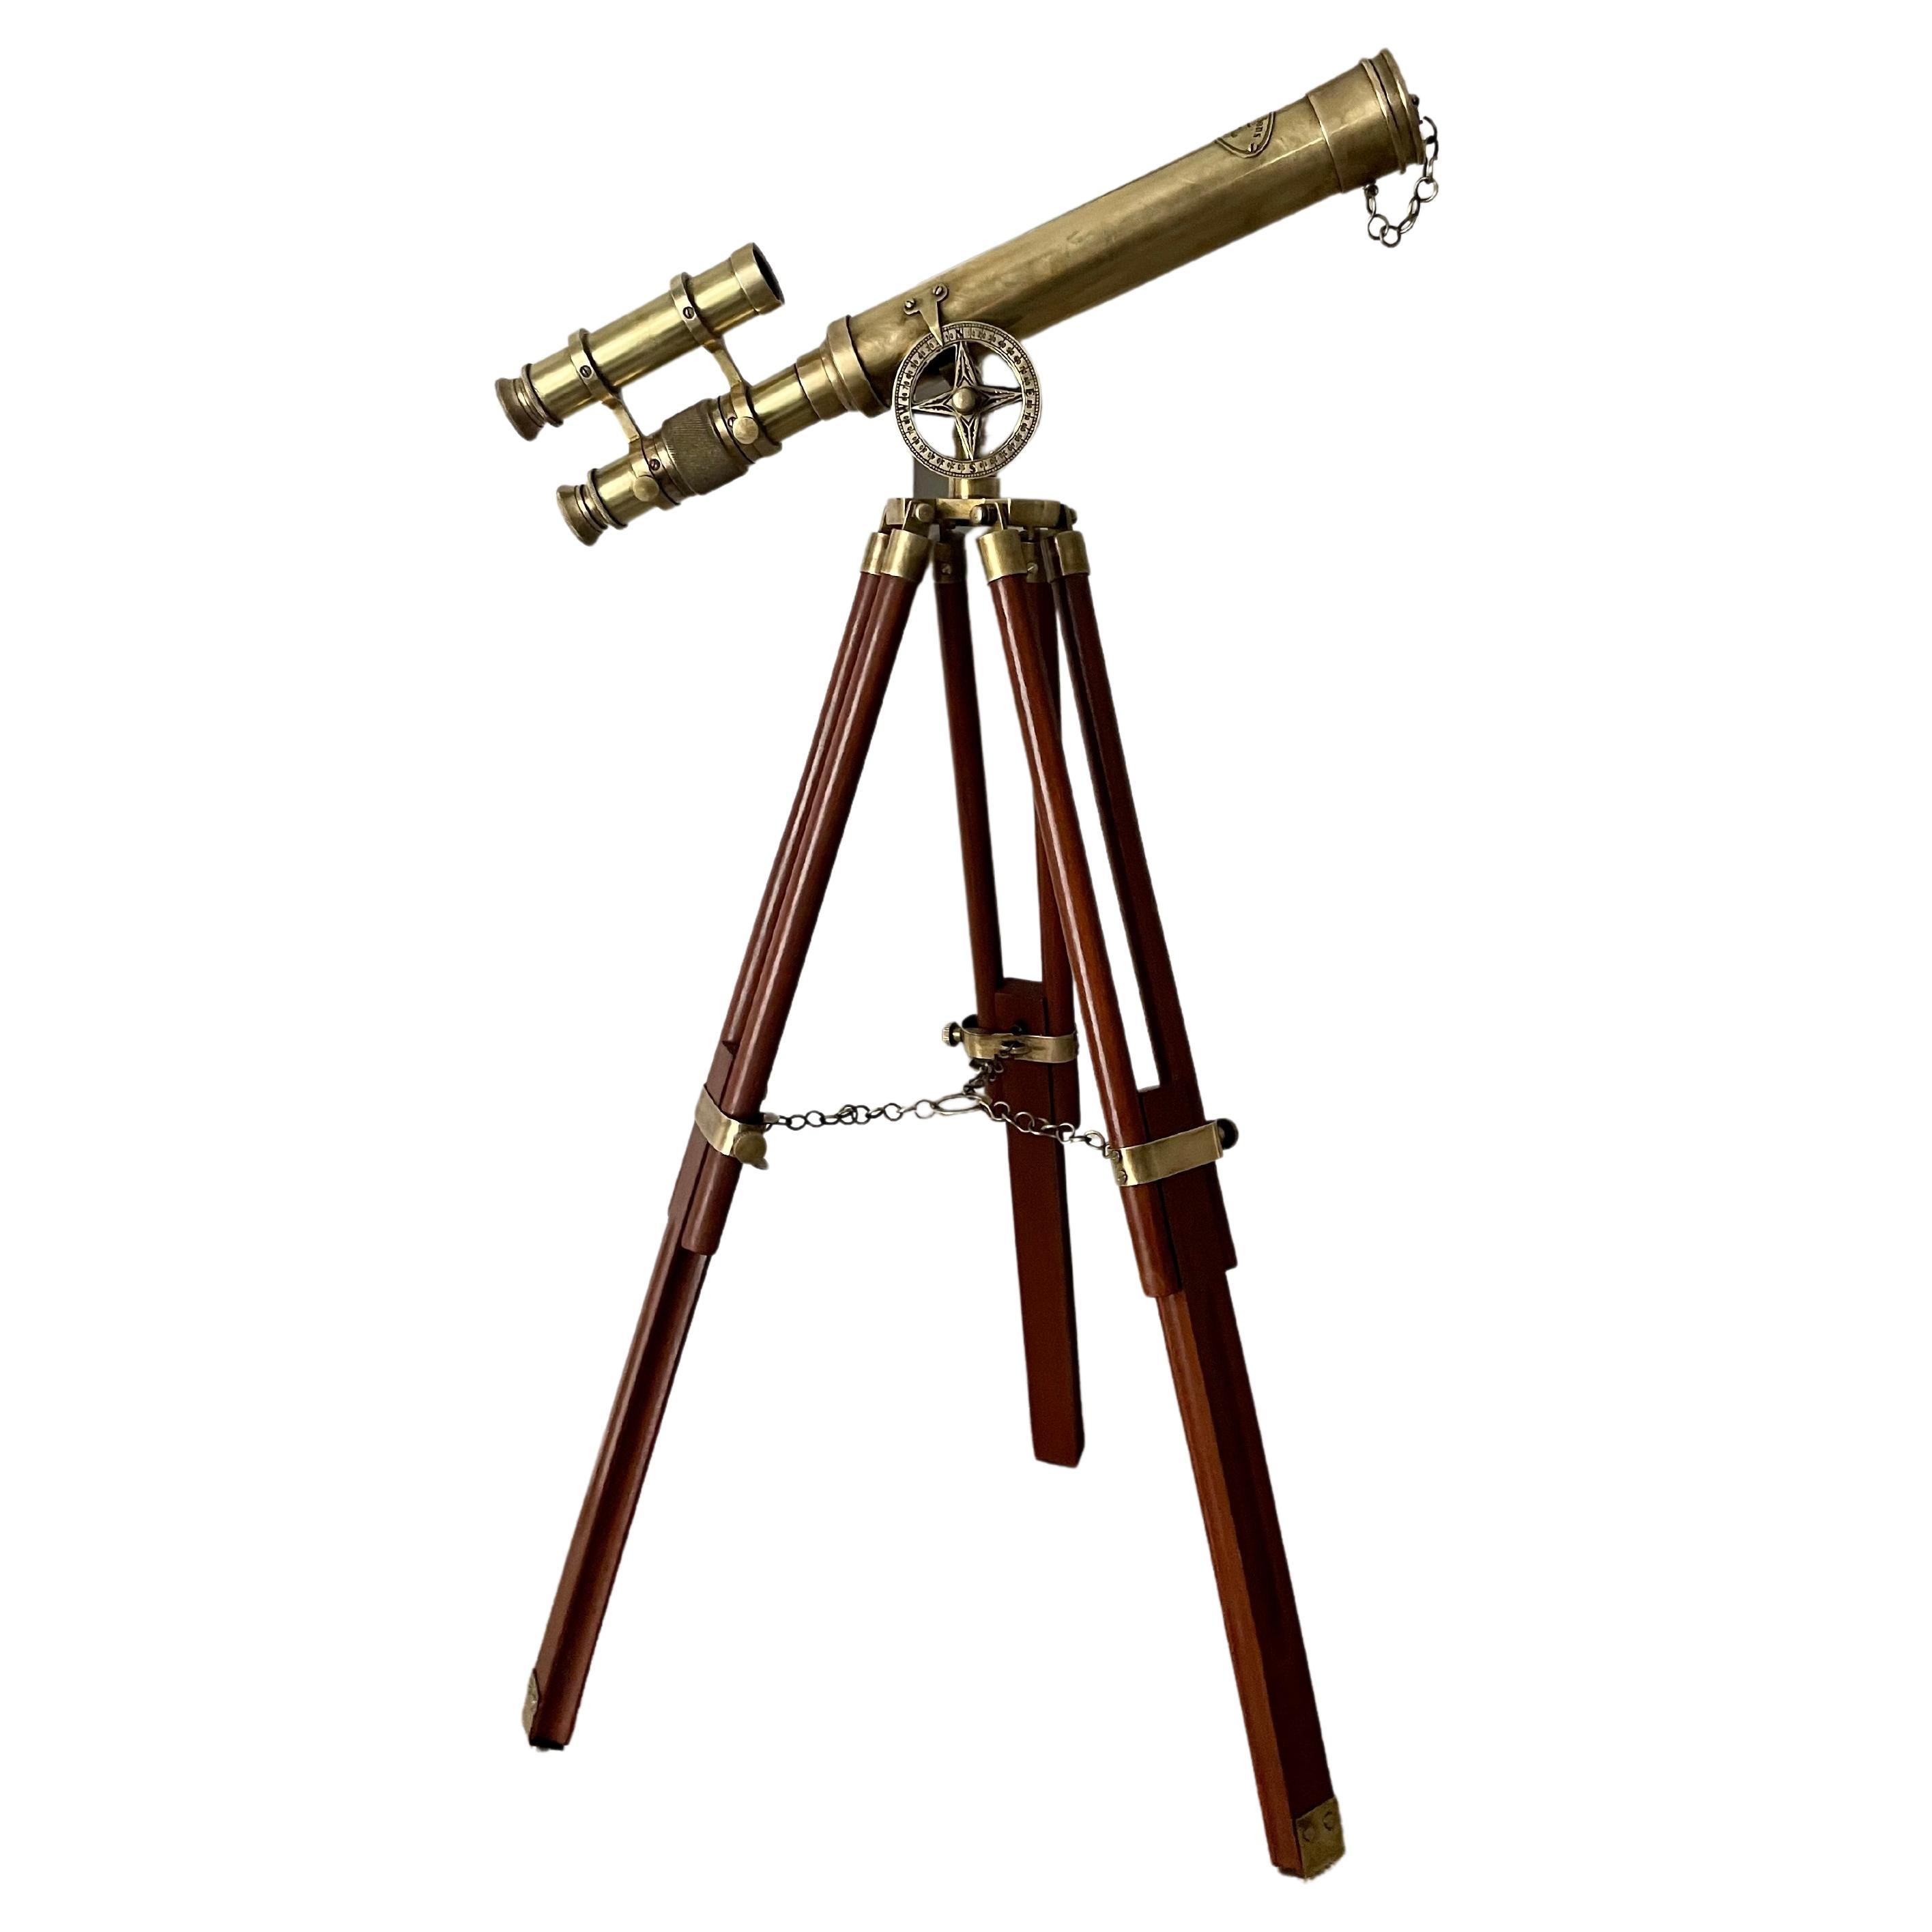 Gilbert & Sons English Navy Working Telescope with Detachable Binoculars